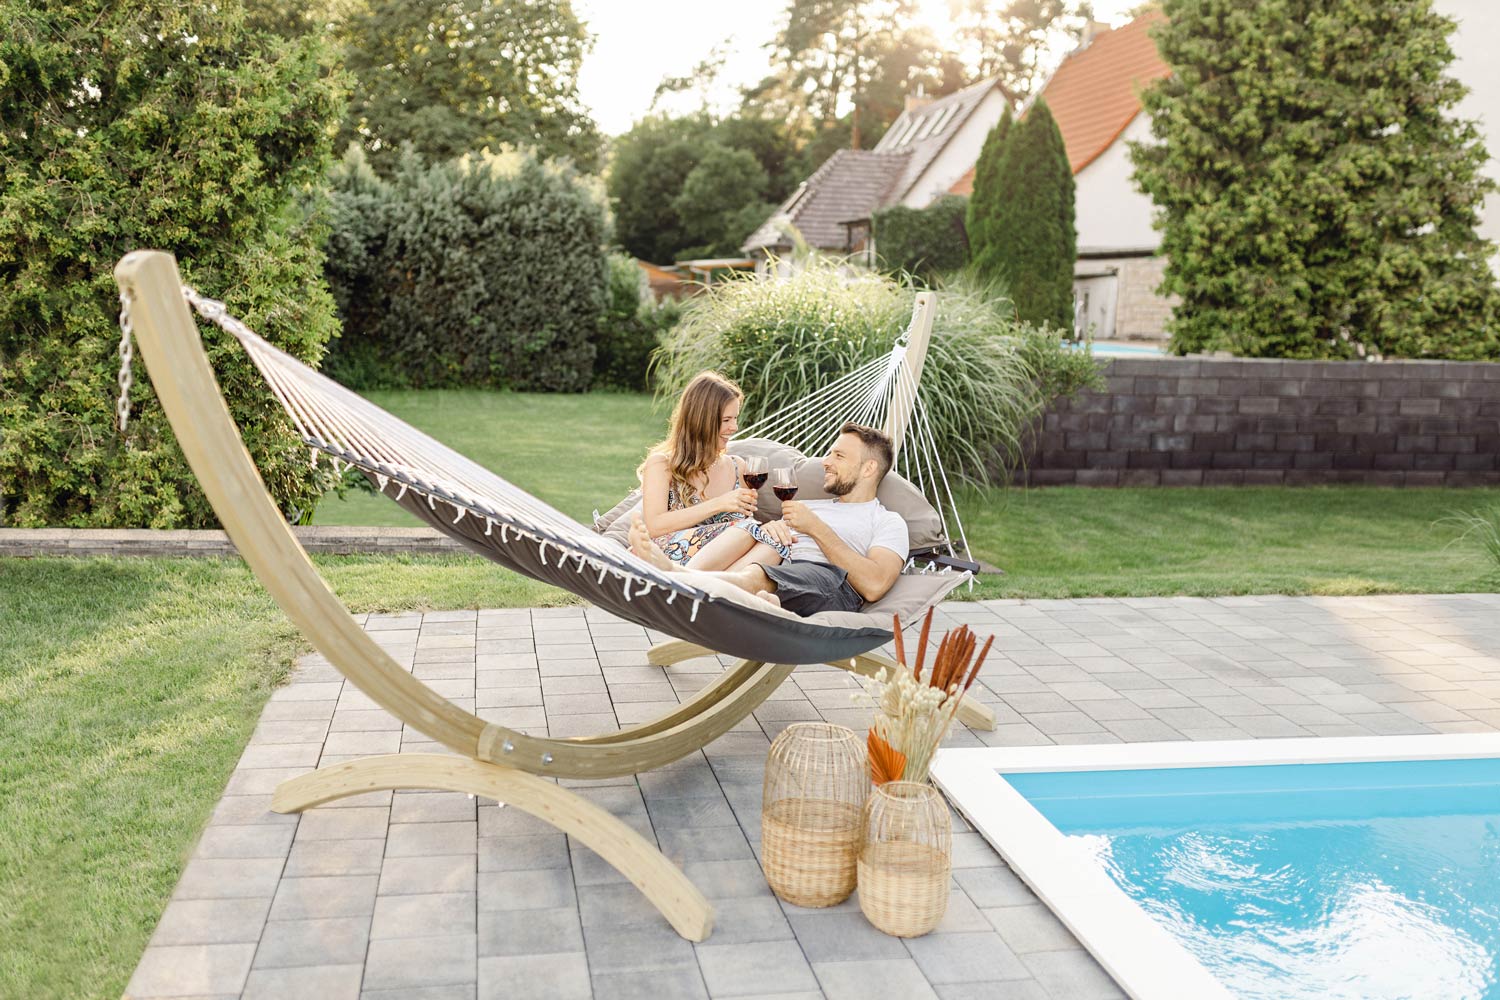 XXL Luxury hammock Fat Hammock - A relaxation oasis for two - video